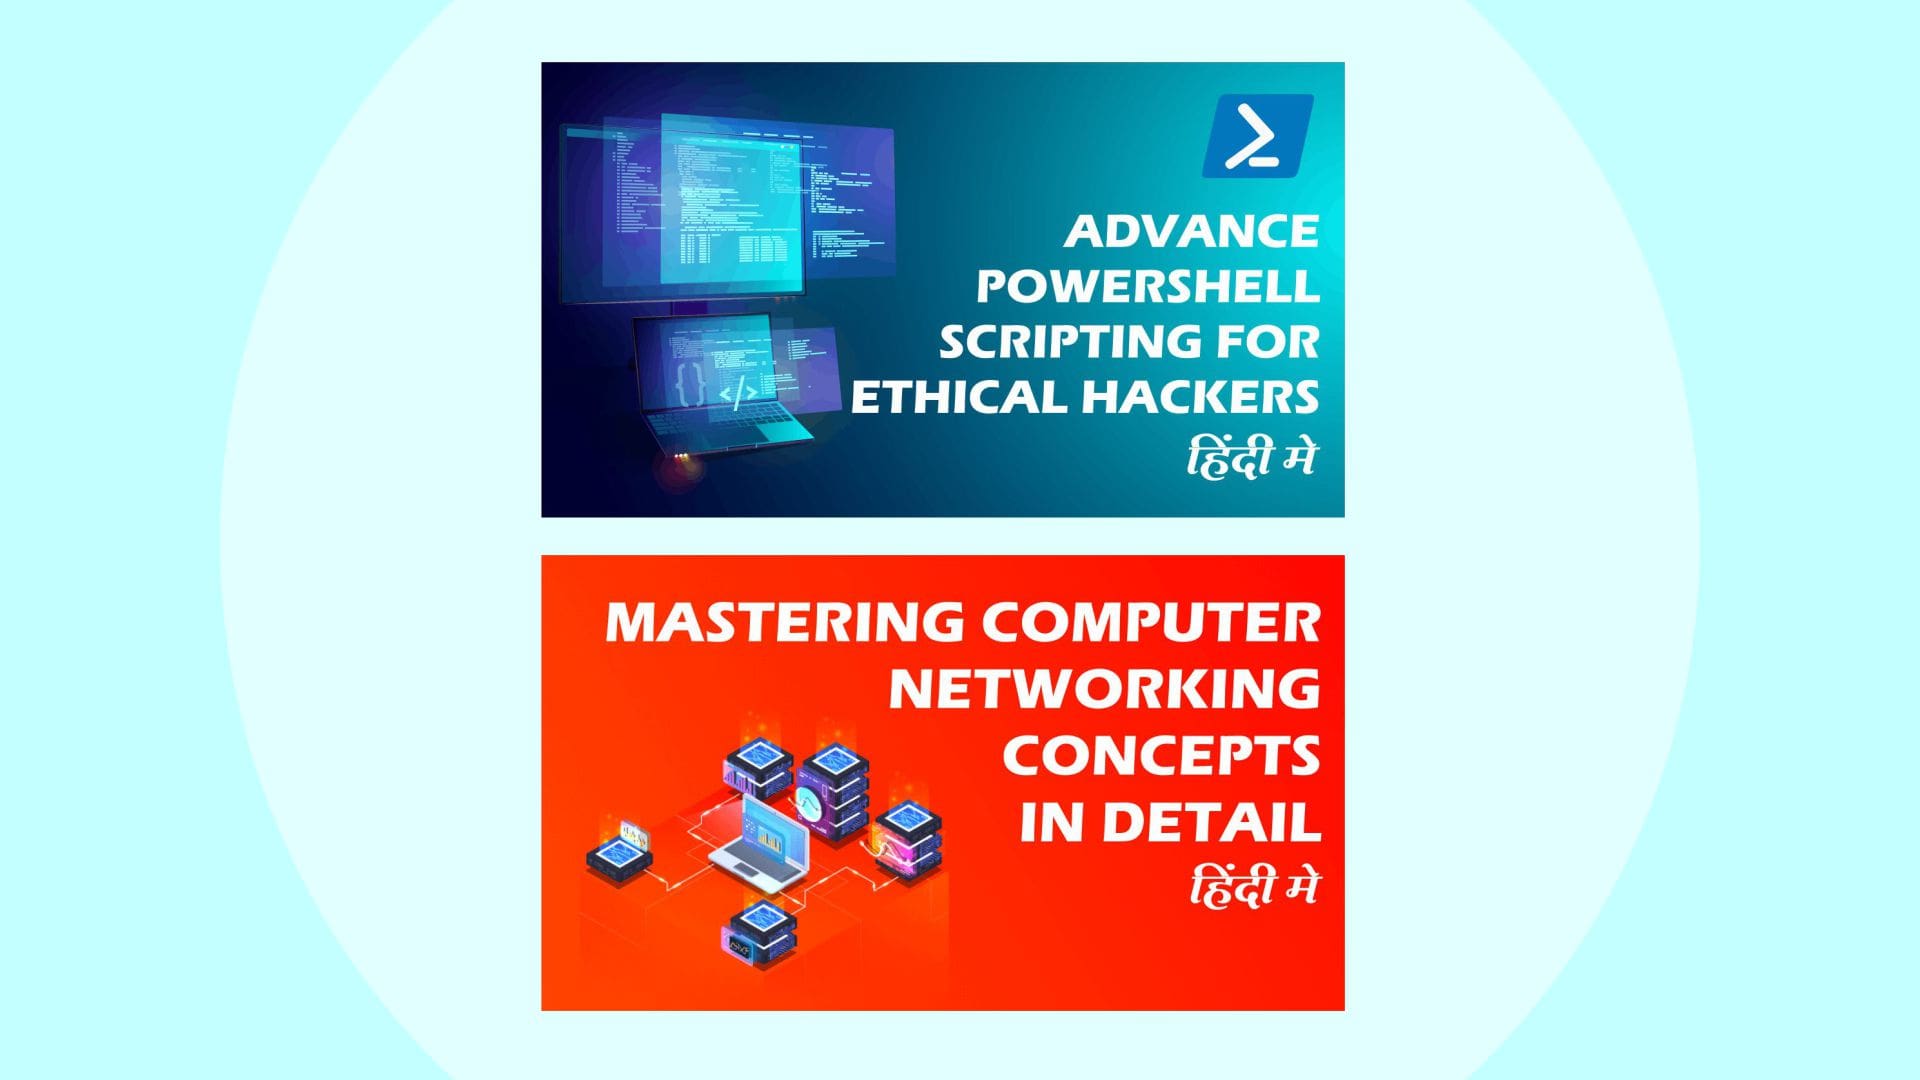 Networking + Powershell Scripting 